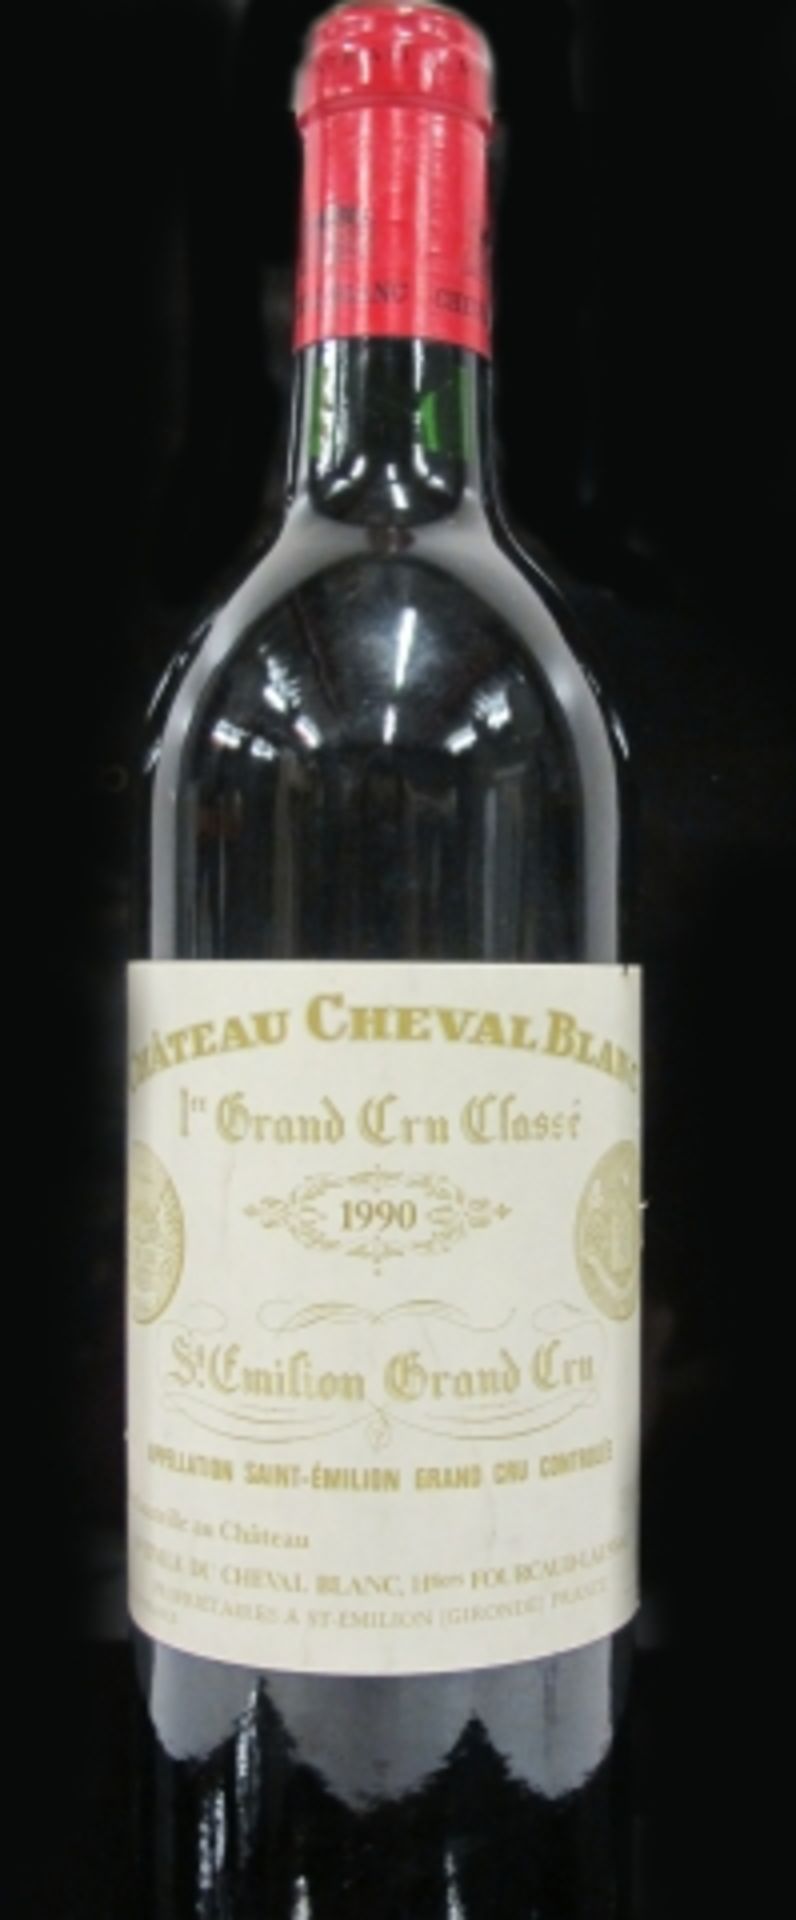 1990 Château Cheval Blanc, Grape Variety Cabernet Franc (57%), Merlot (40%), ABV 13.5%, Region